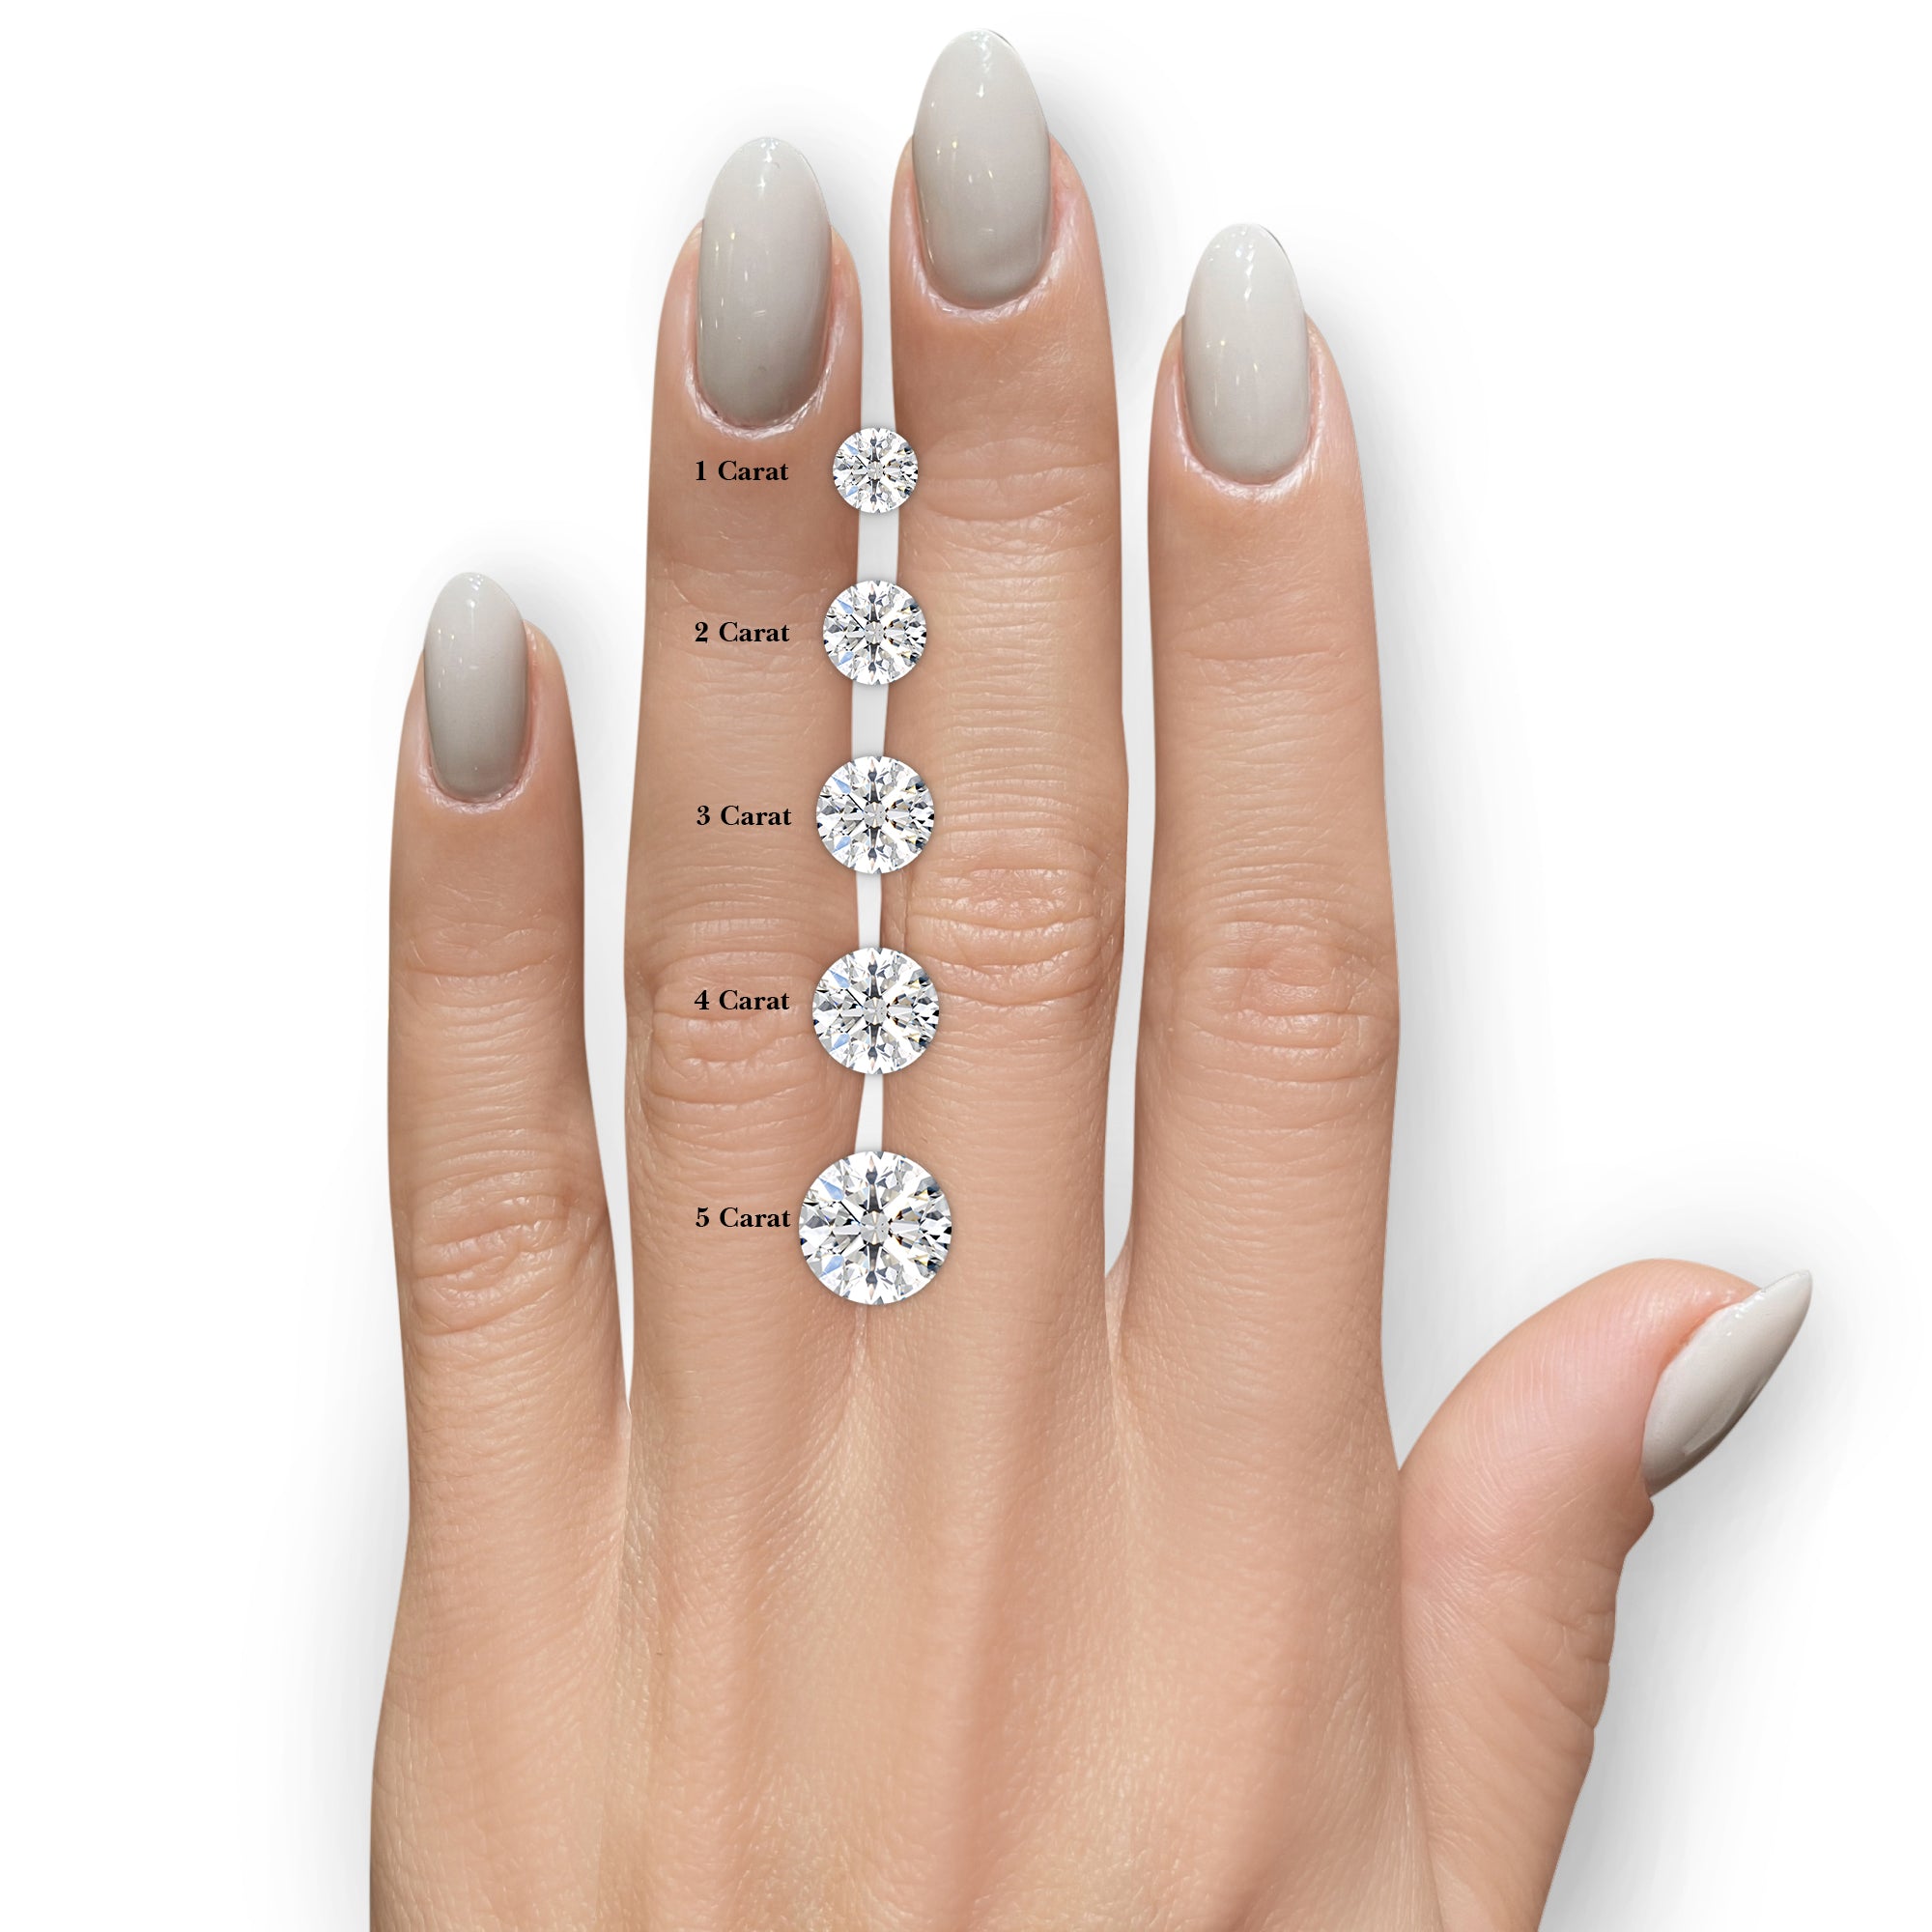 Alora Diamond Engagement Ring -18K White Gold